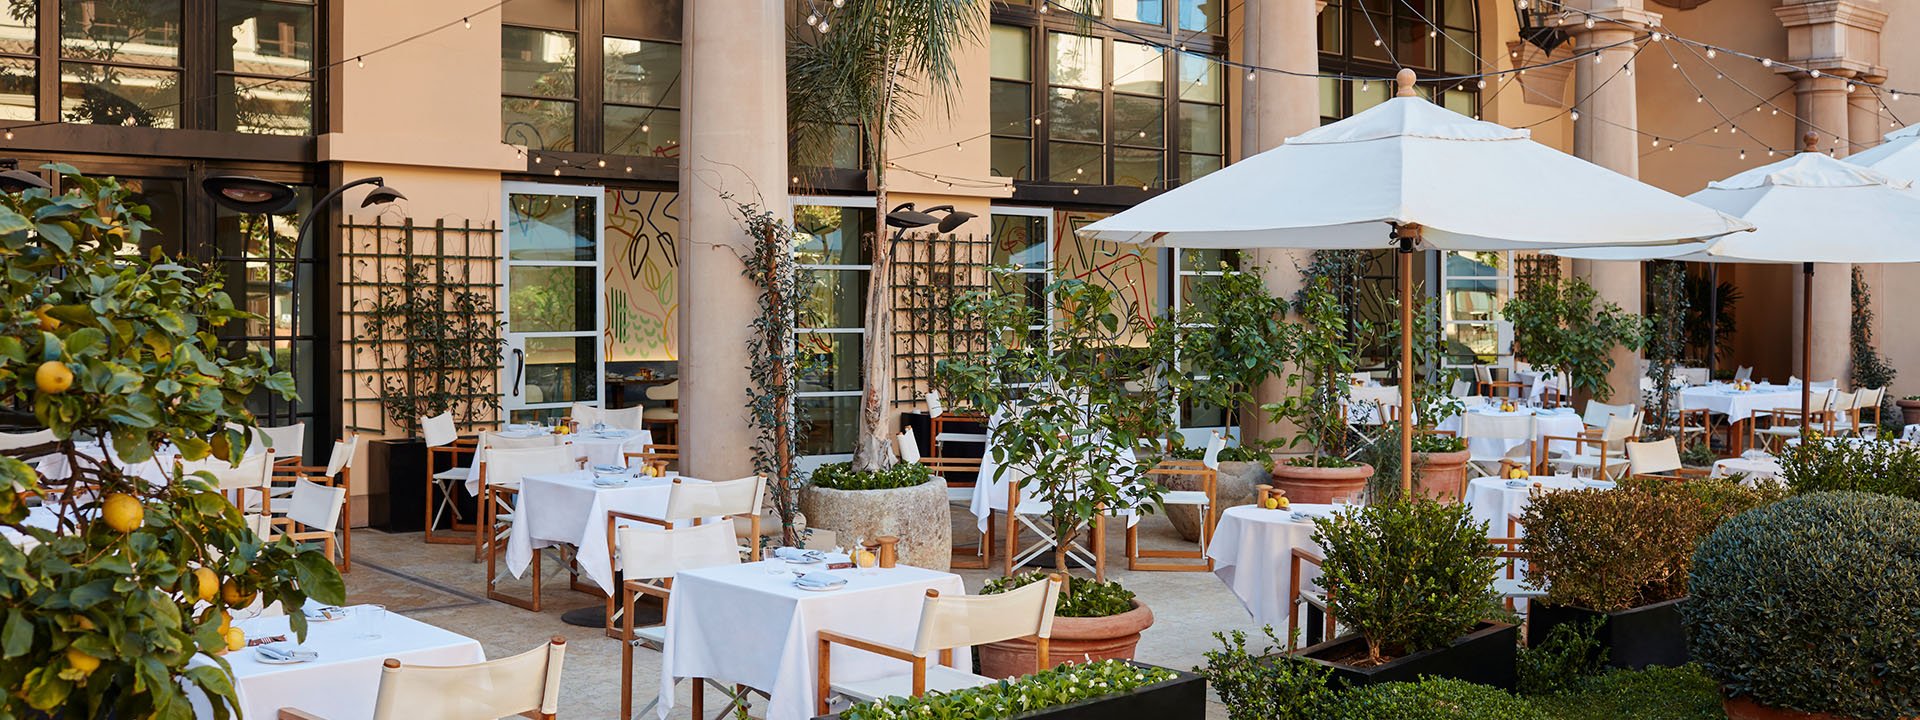 Los Angeles Restaurants & Bars | The Maybourne Beverly Hills